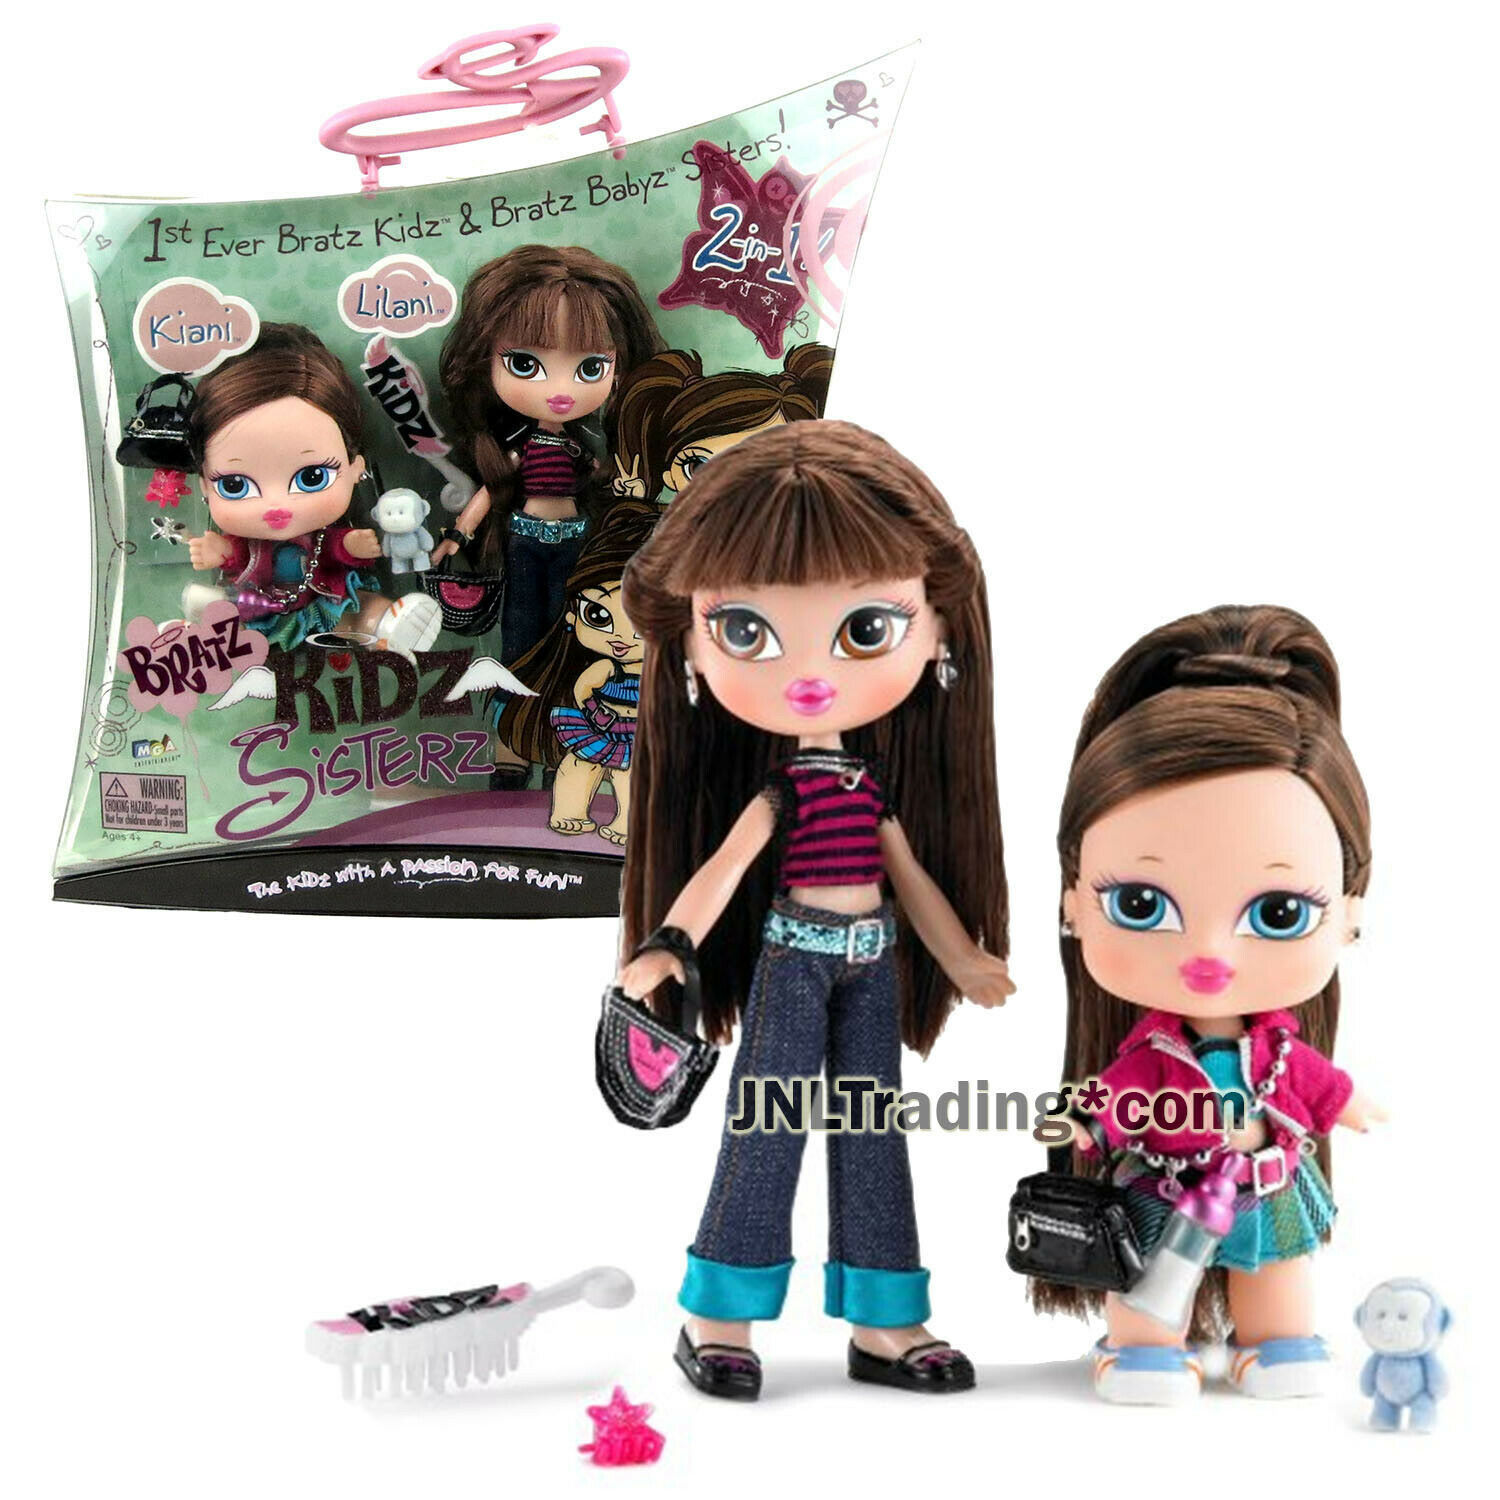 Bratz Kidz Sisterz 7 Inch Doll - KIANI and LILANI with Purse and Hairbrush - $74.99